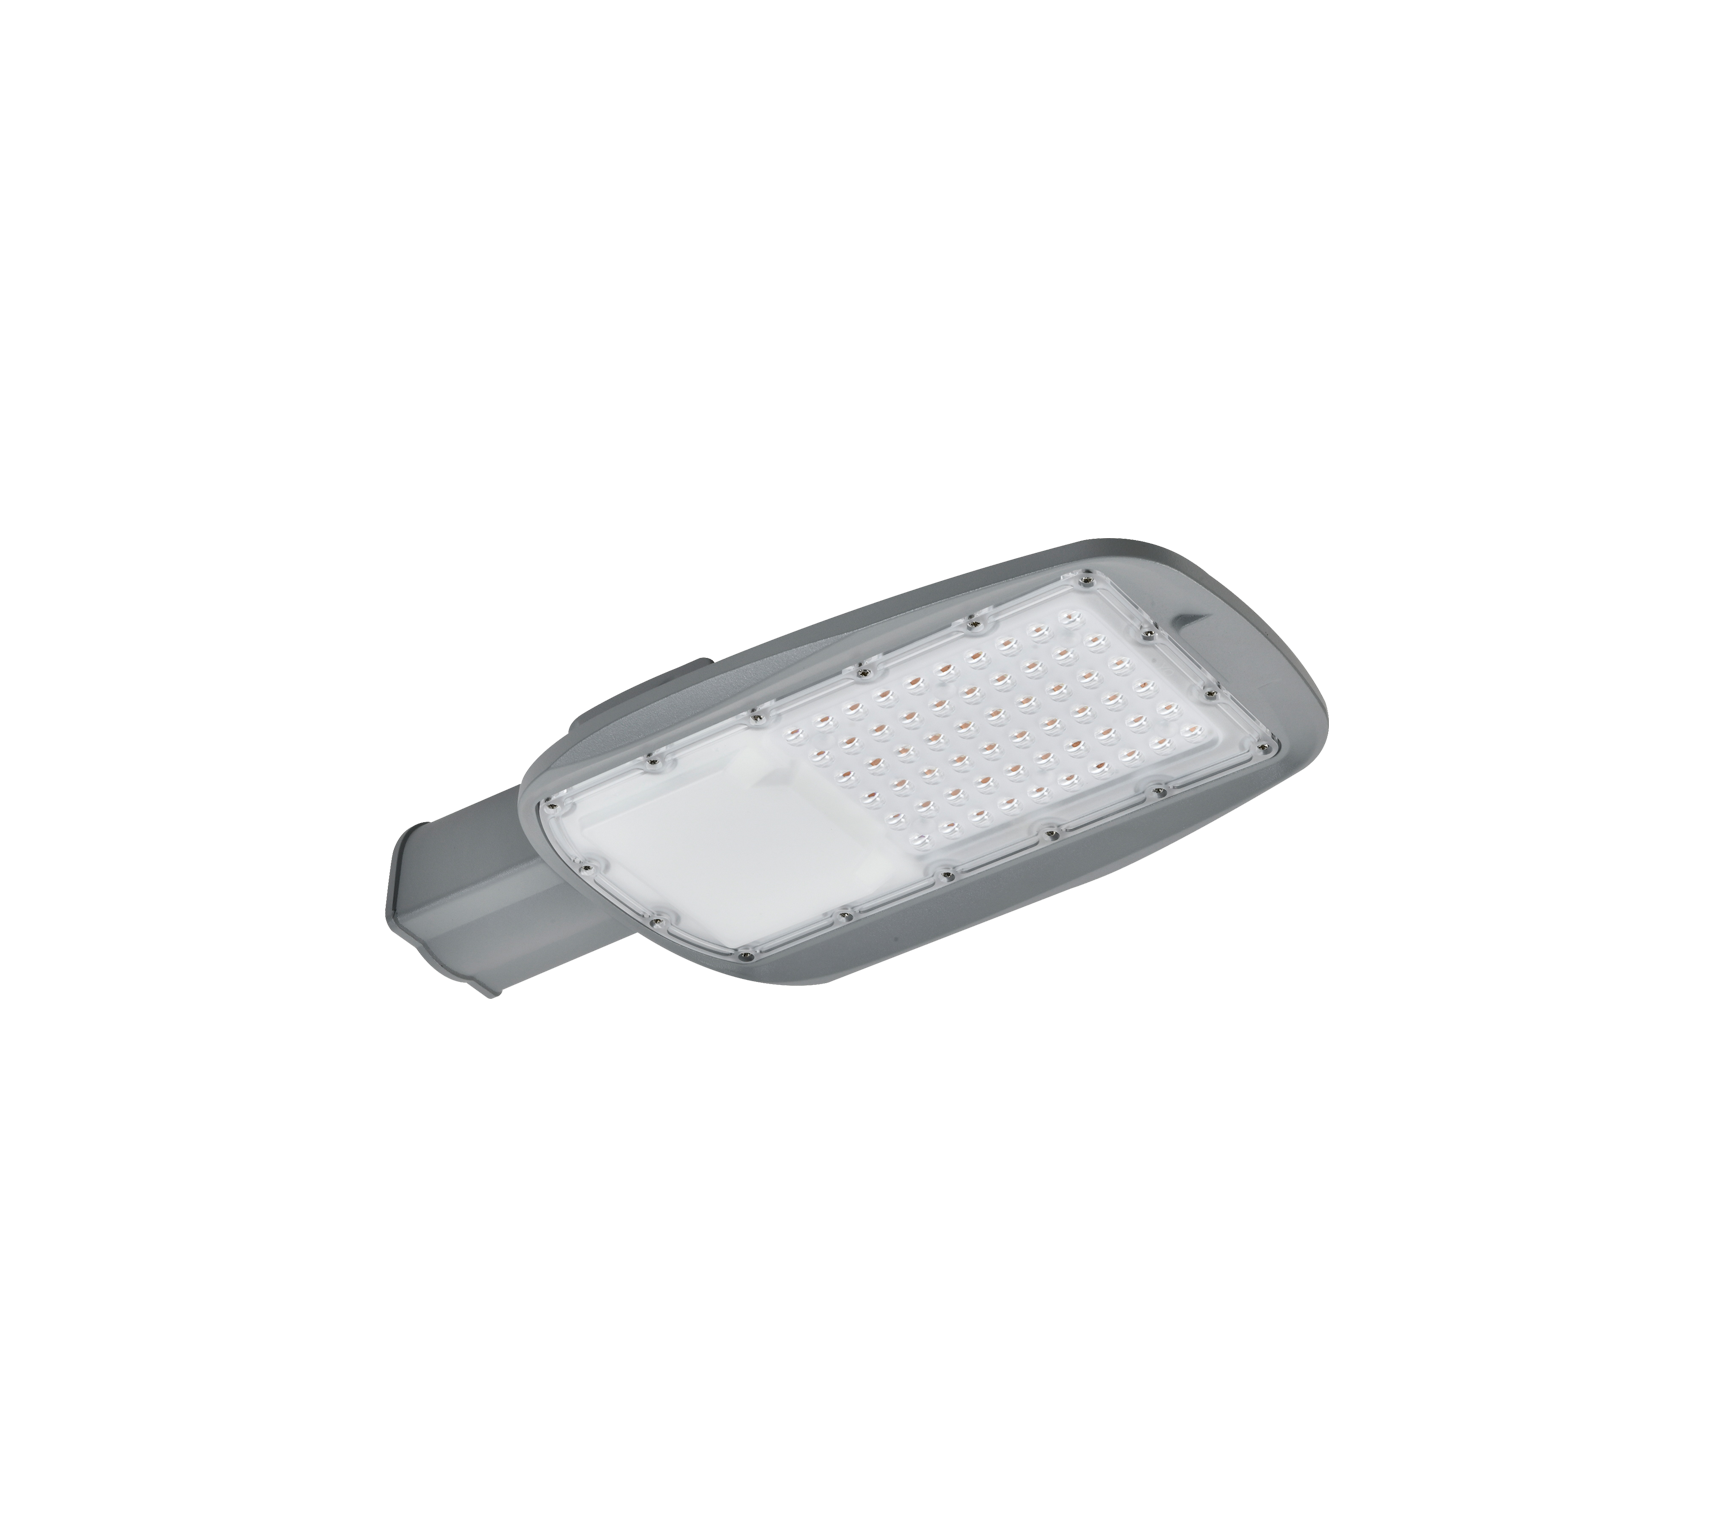 LED-PETALA-60-65-3C <span>(caixa)</span><br/>